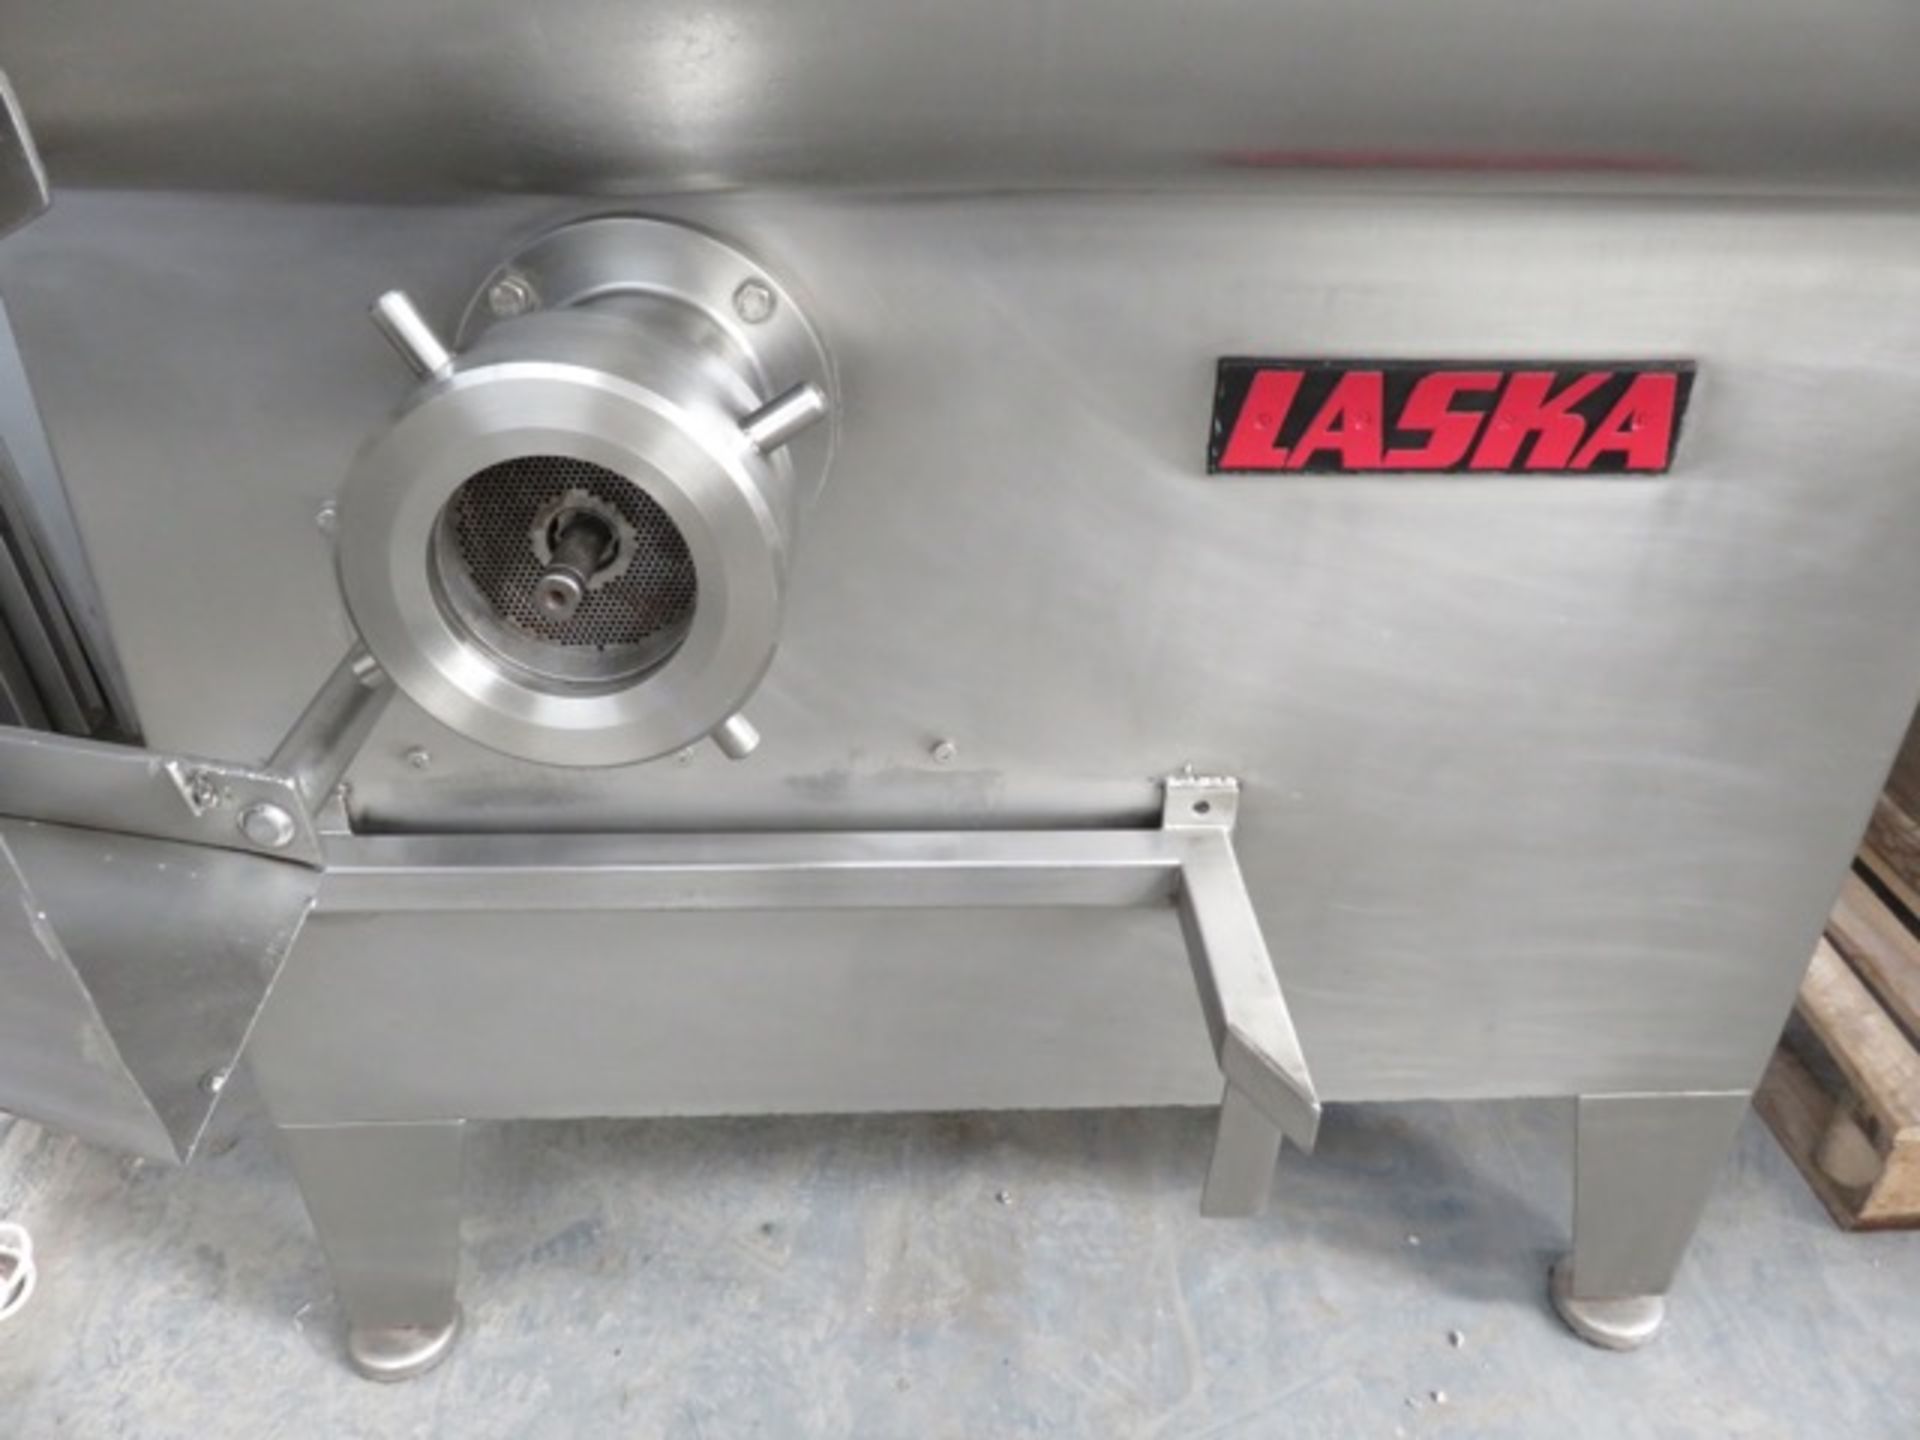 Laska cross feed Mixer Grinder. Model WMW133. Totally S/s 400litre mixer/grind. - Bild 3 aus 11